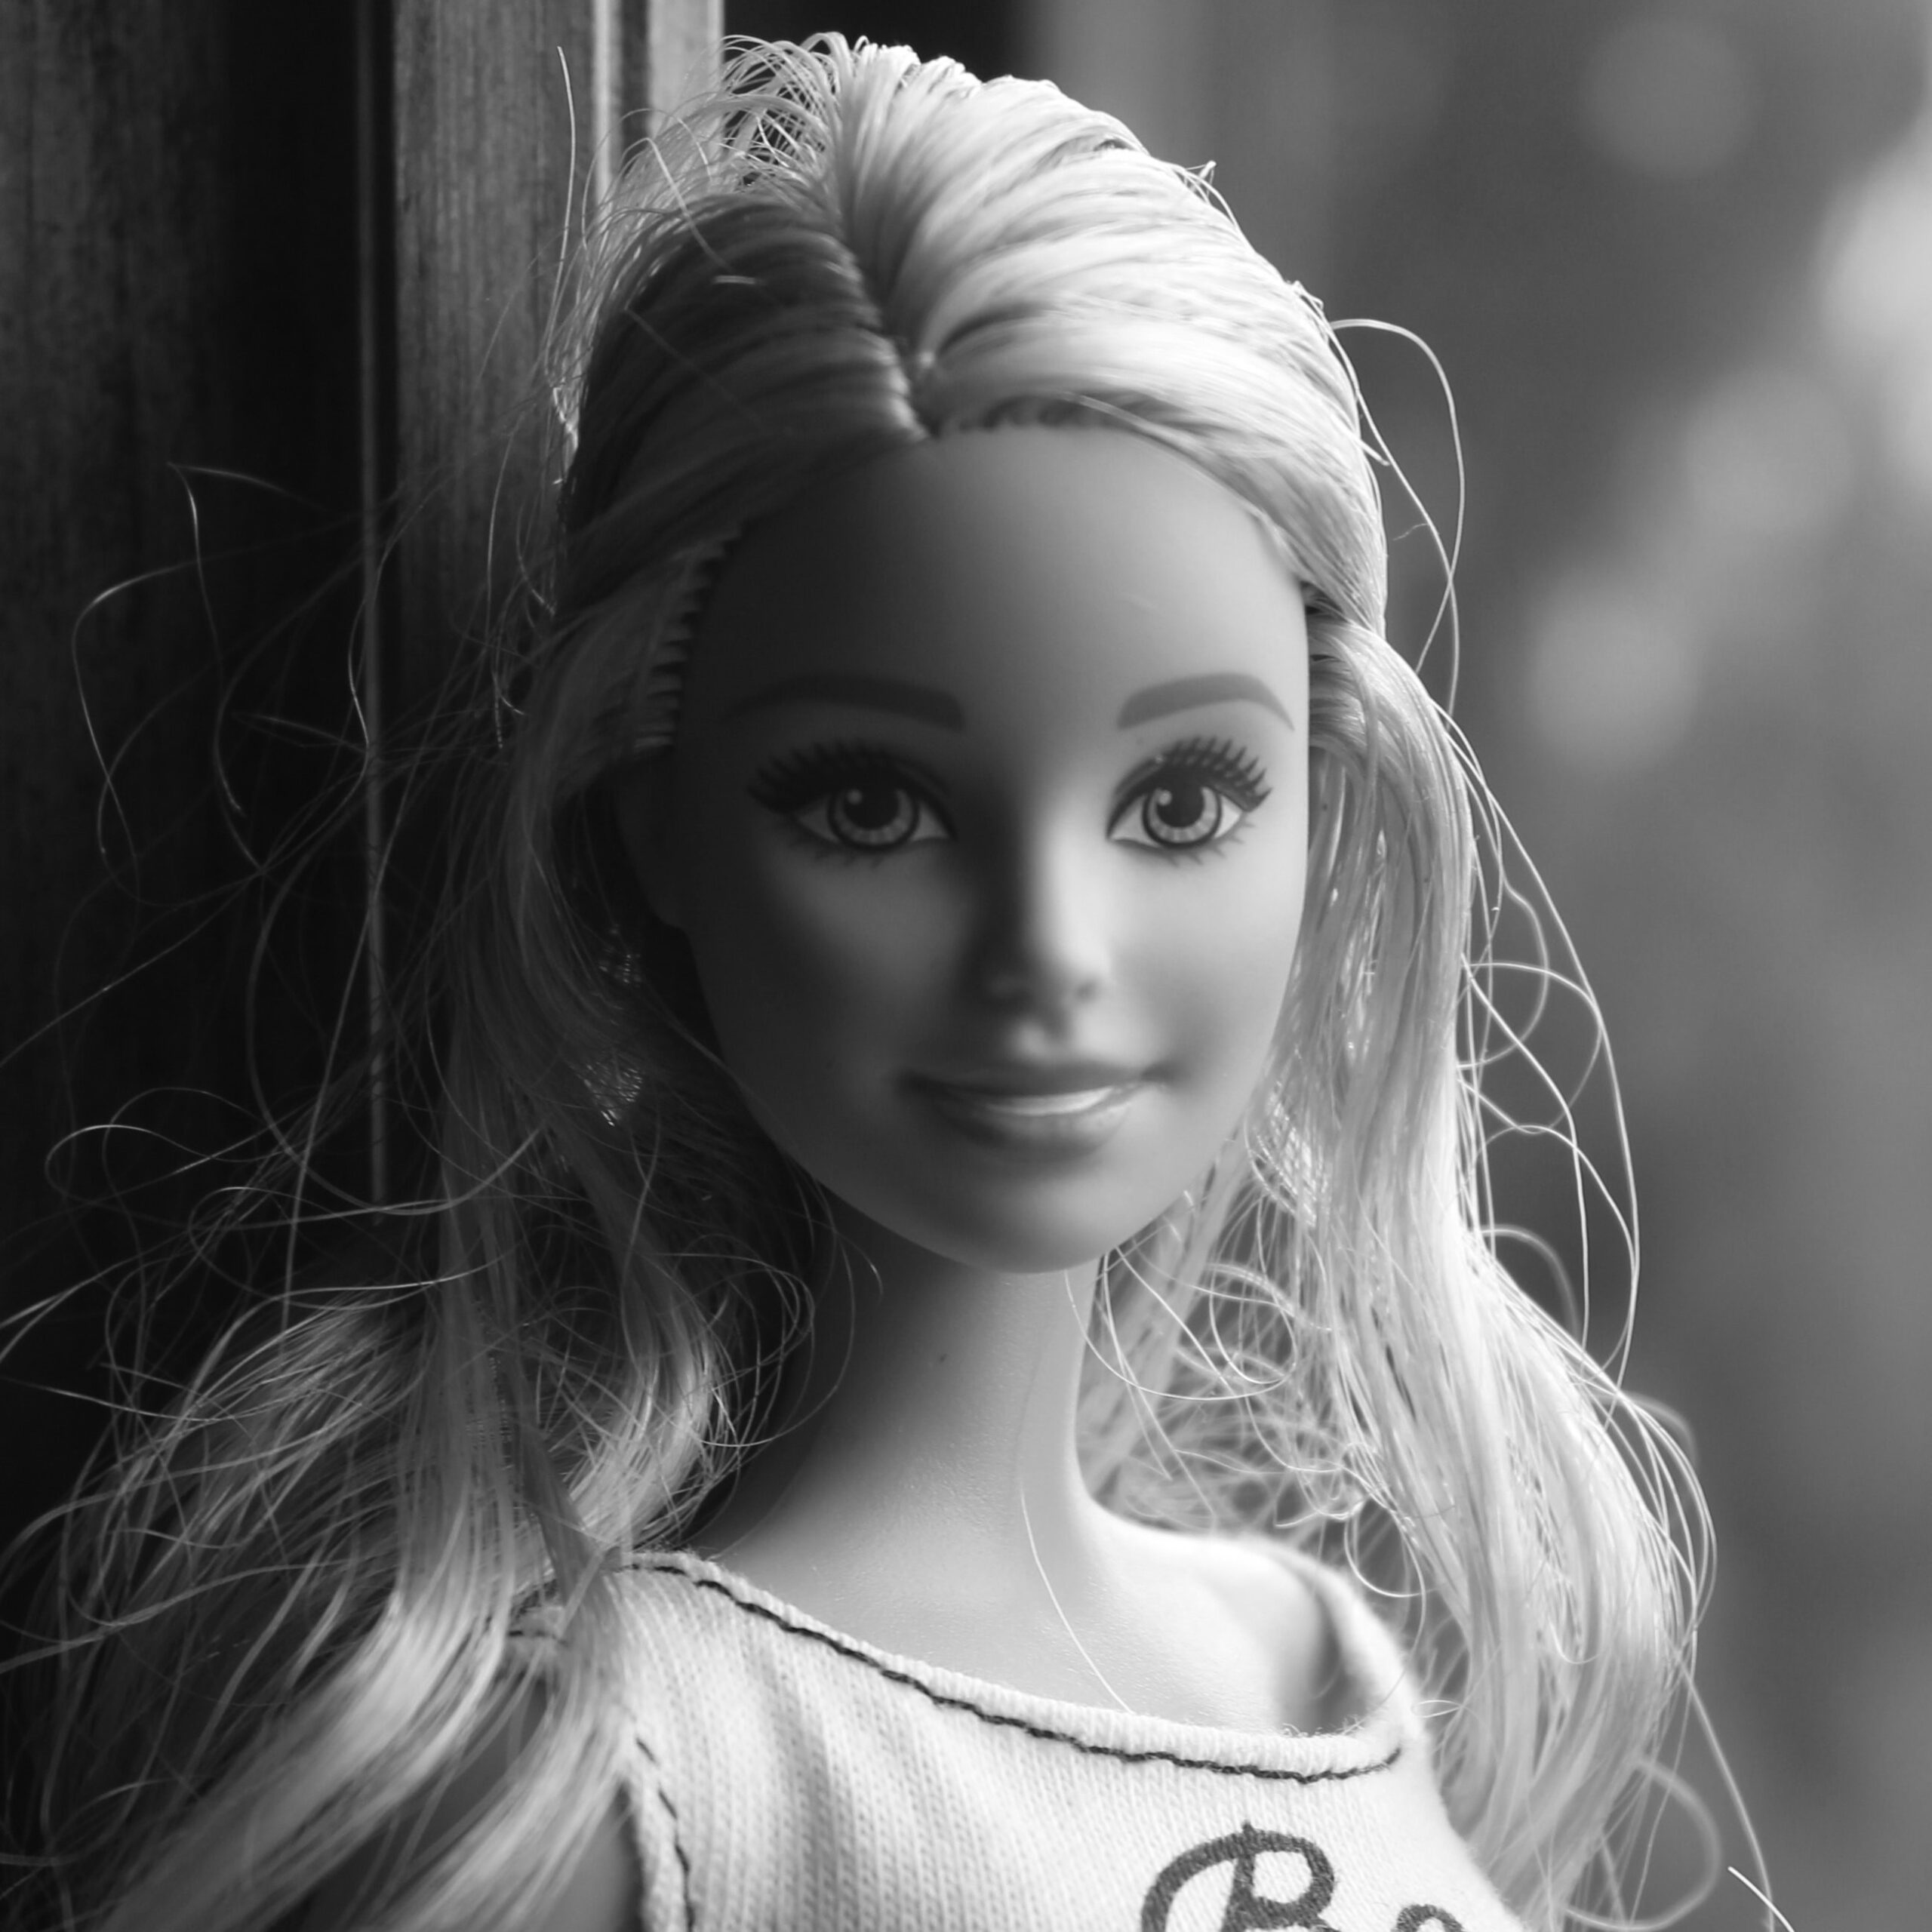 Barbie Vs Barbie Girl Considerations In A Parody World Cole Schotz